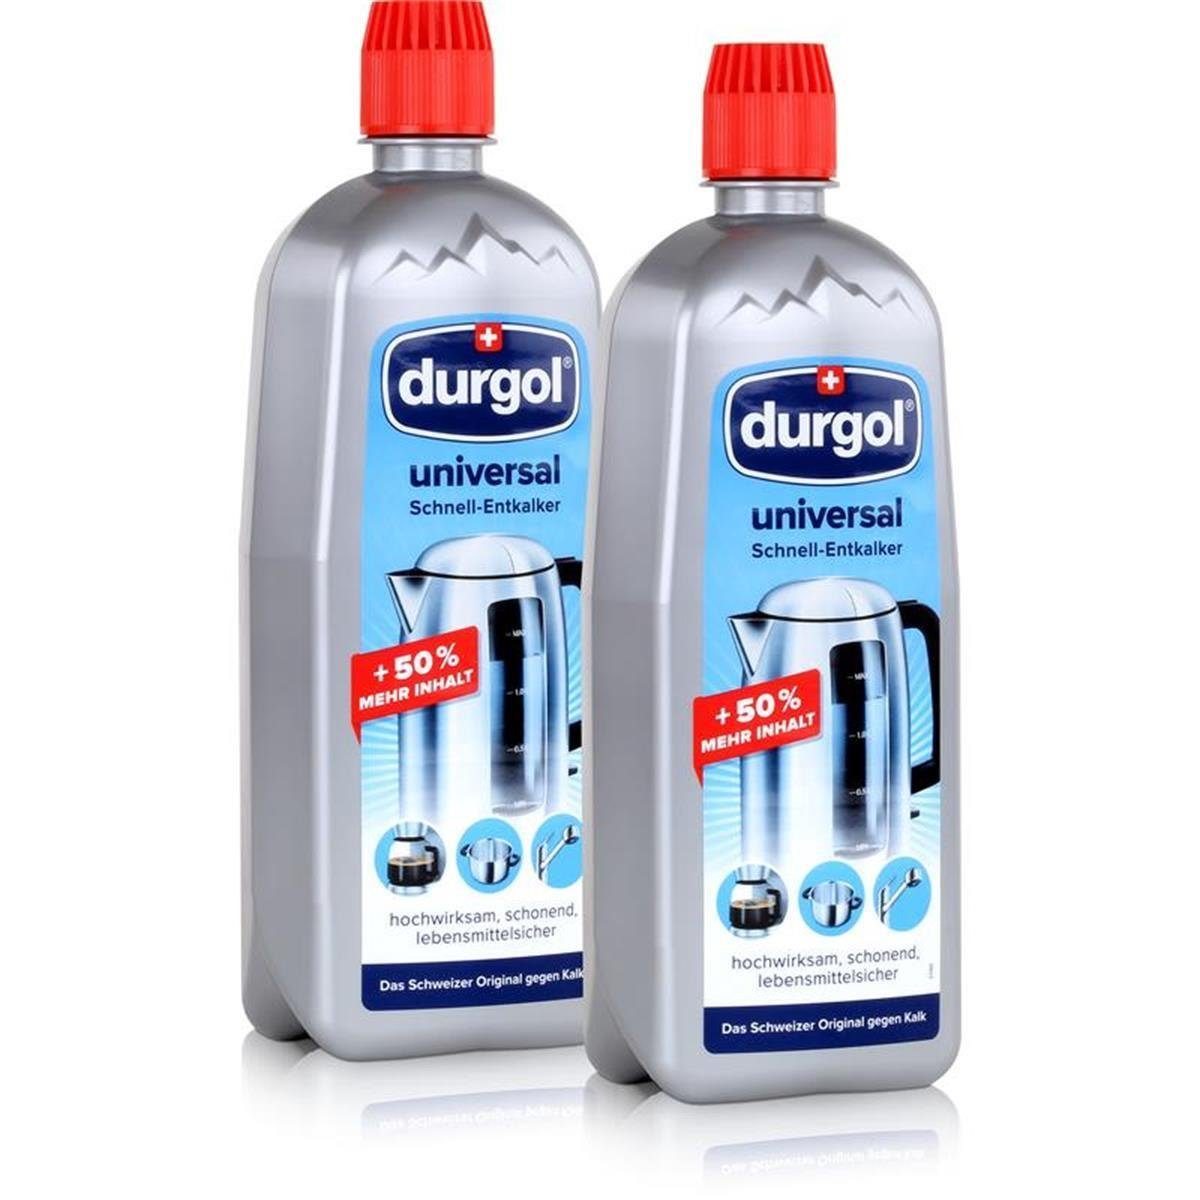 Durgol Durgol Universal Schnell-Entkalker 750ml - schonend, hochwirksam (2er Entkalker